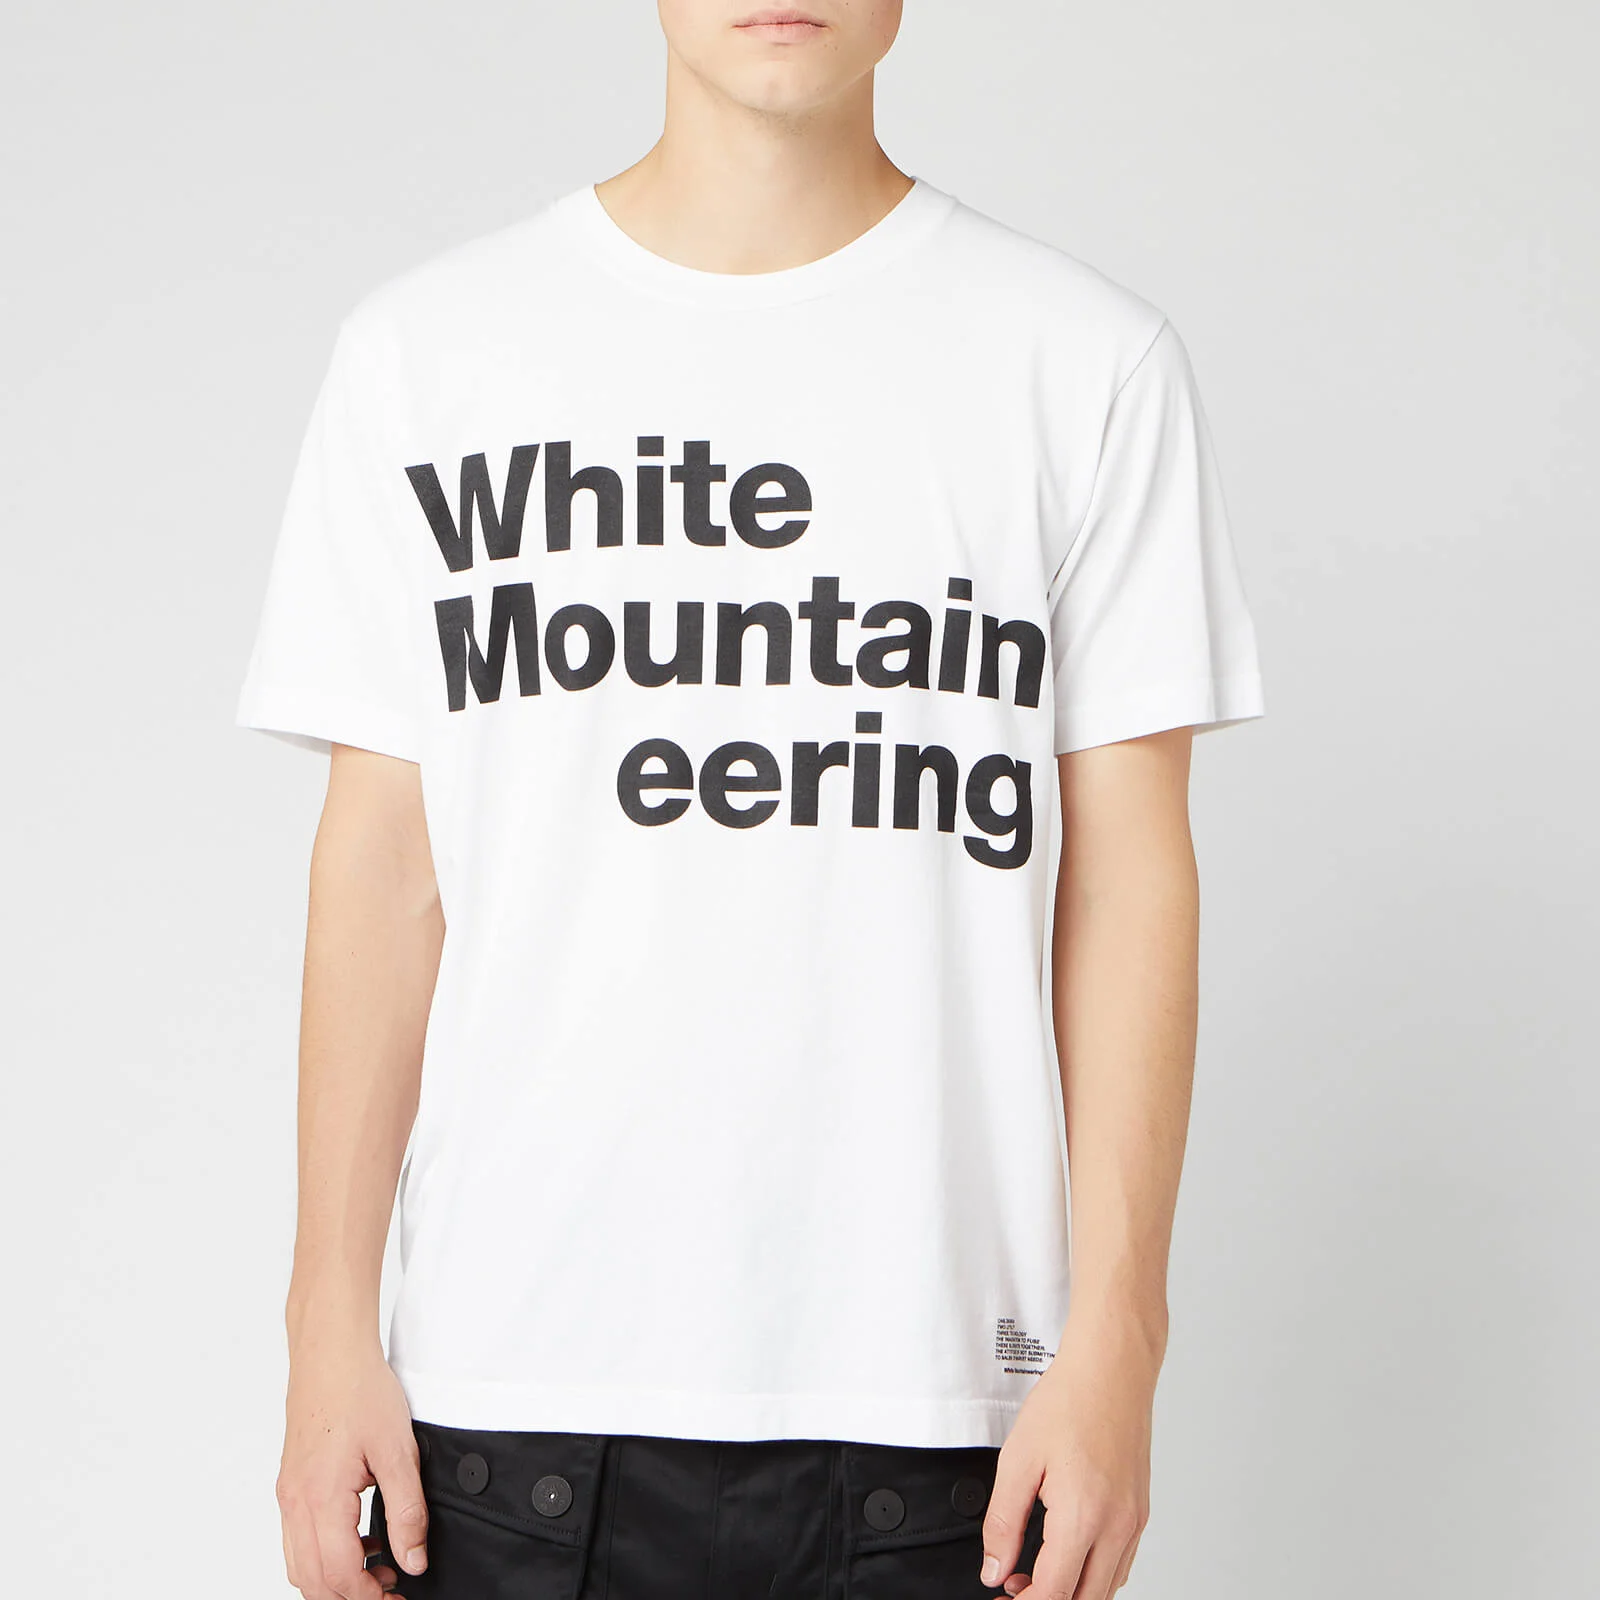 White Mountaineering Men's Printed T-Shirt White Mountaineering C - White Image 1